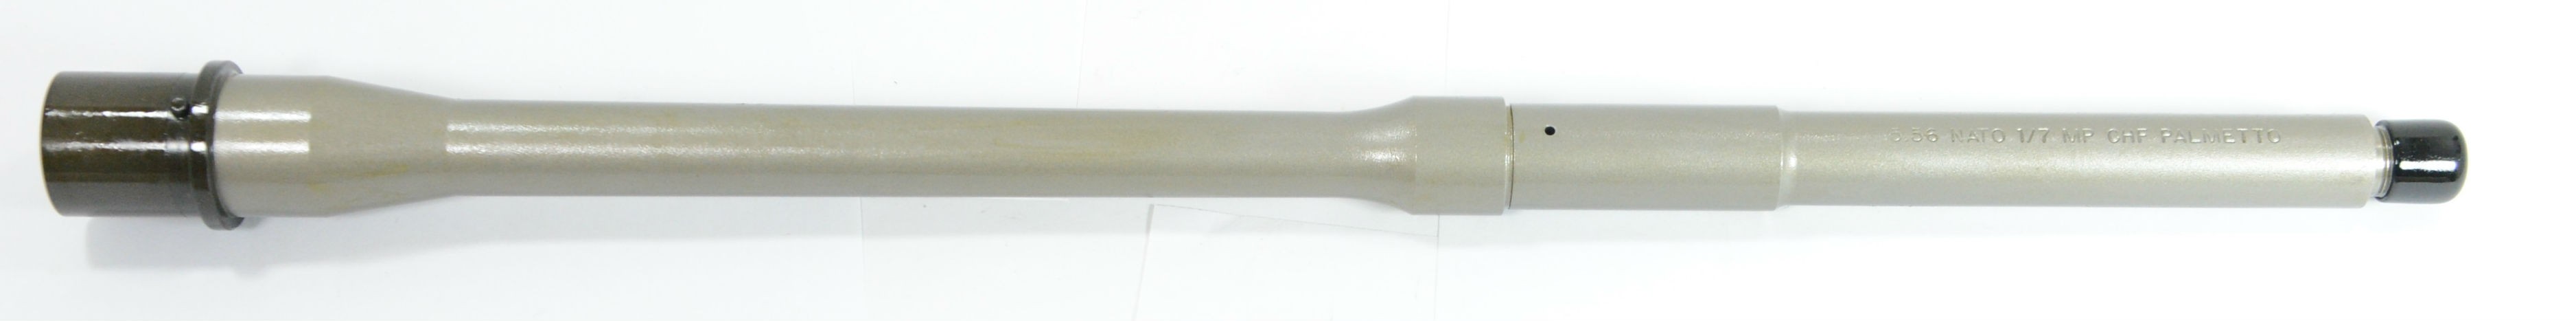 PSA 16" Mid-length Lightweight CHF Stainless Steel 5.56 NATO 1/7 Barrel - 1897